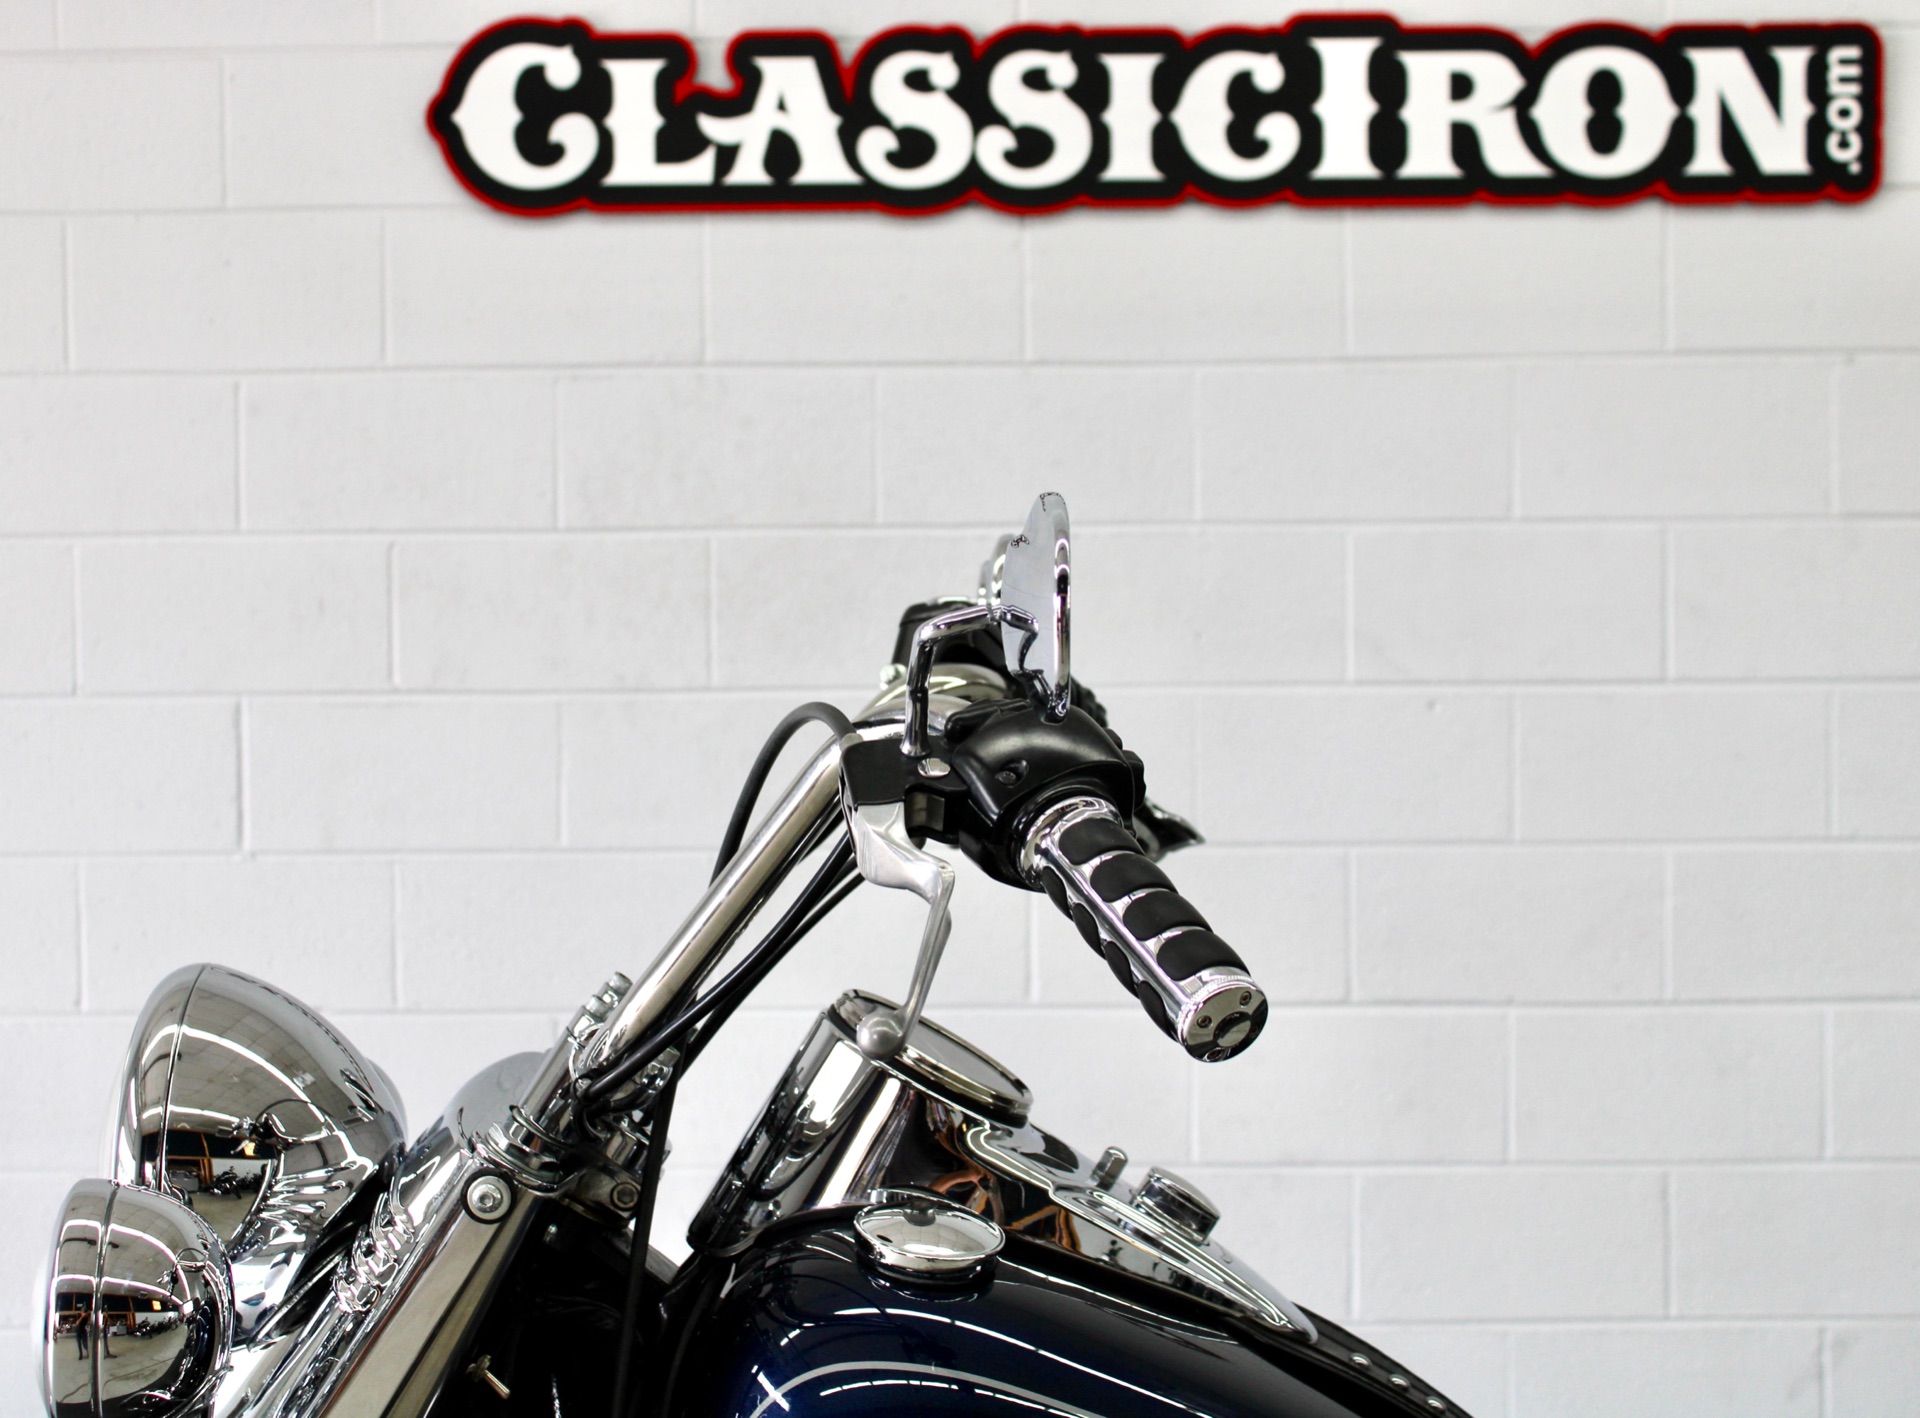 2013 Harley-Davidson Heritage Softail® Classic in Fredericksburg, Virginia - Photo 17